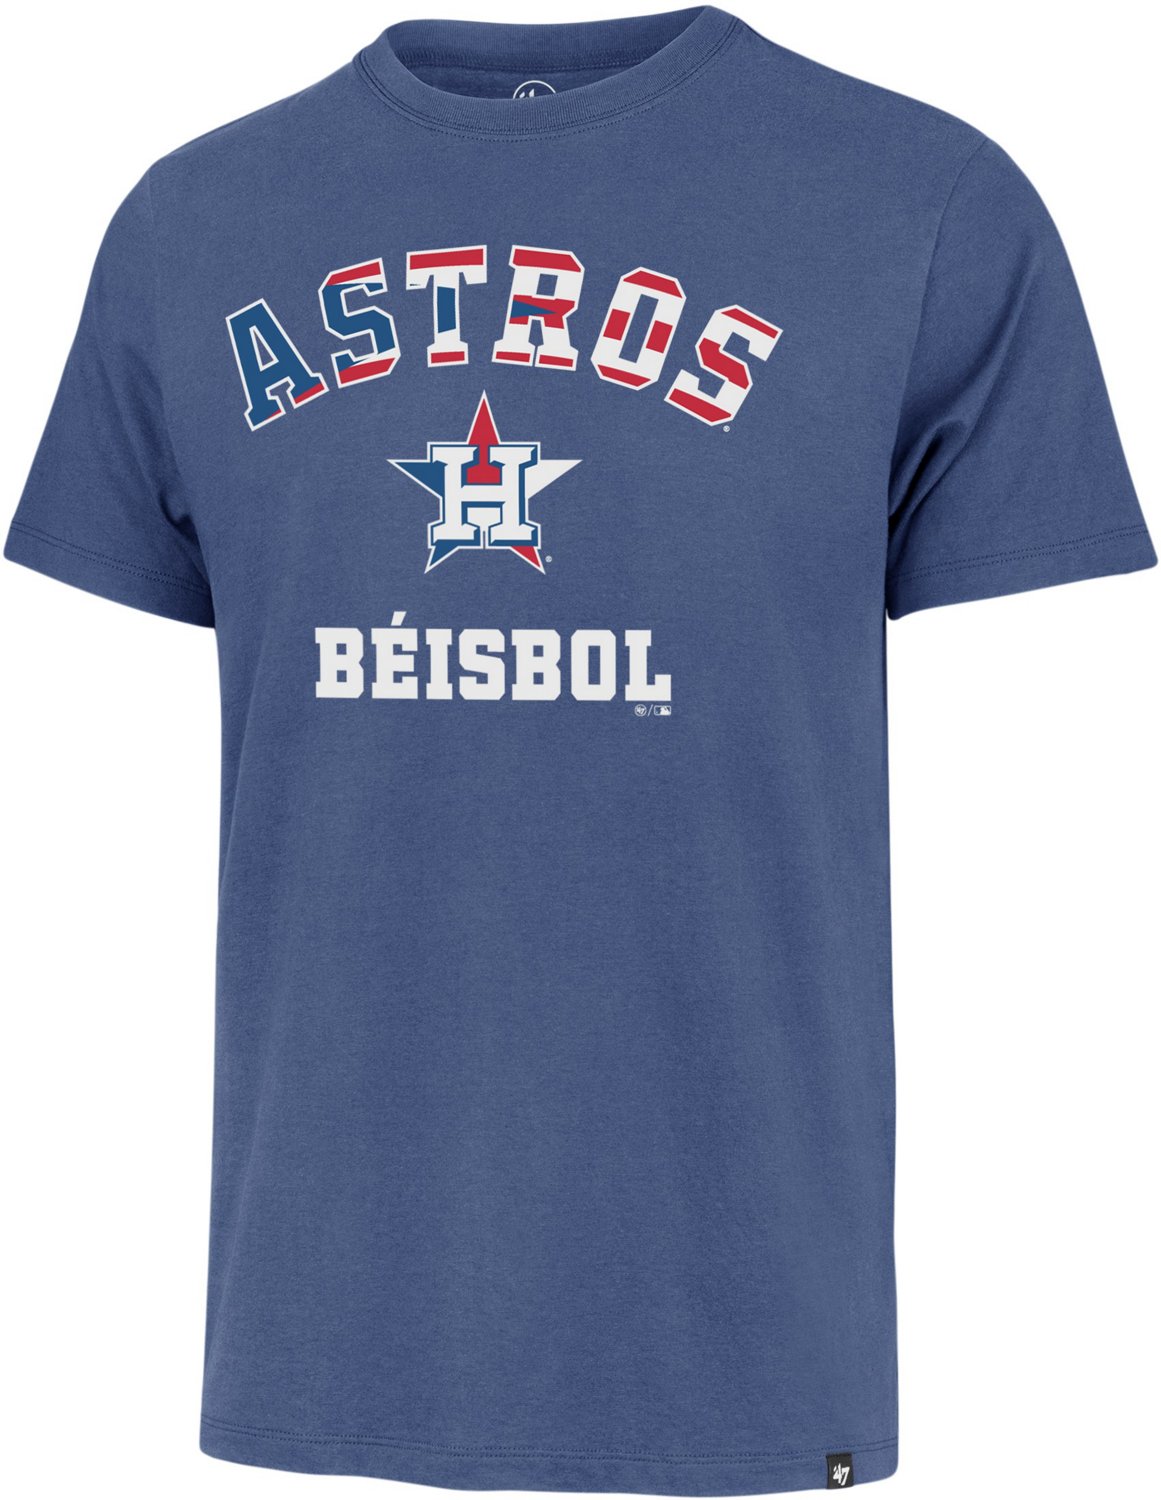 astros shirt amazon